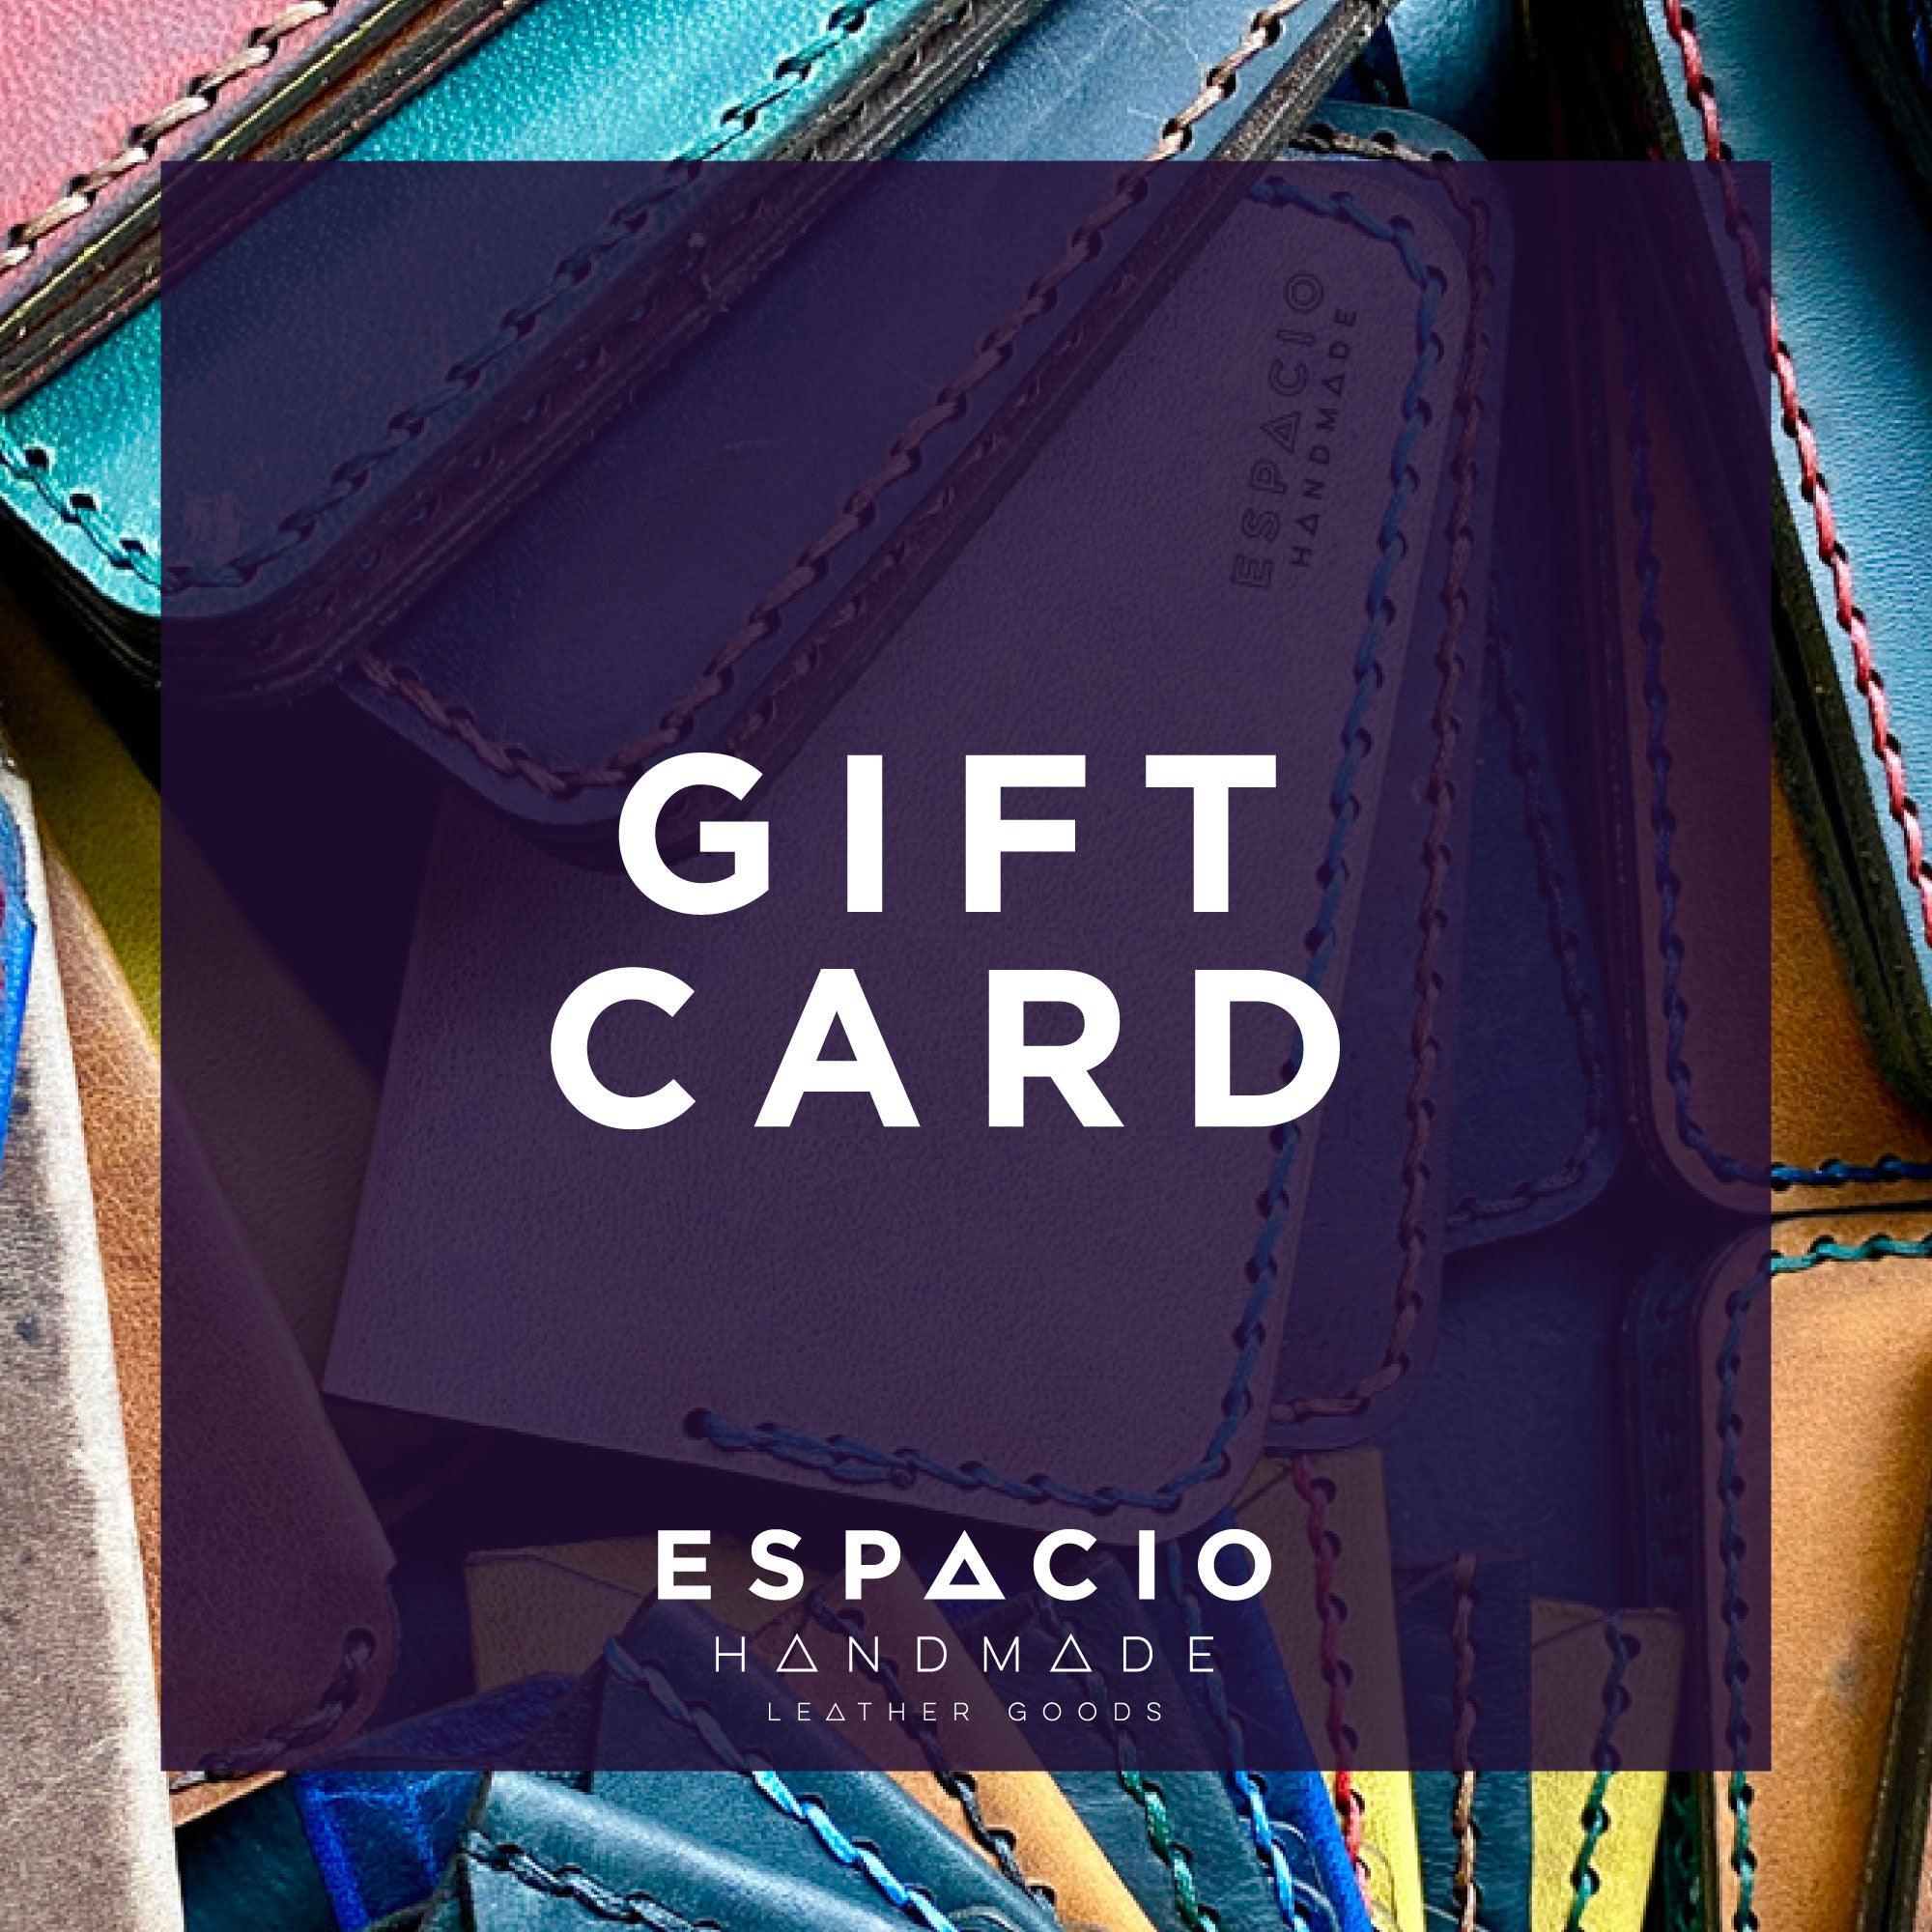 Gift Card - Espacio Handmade